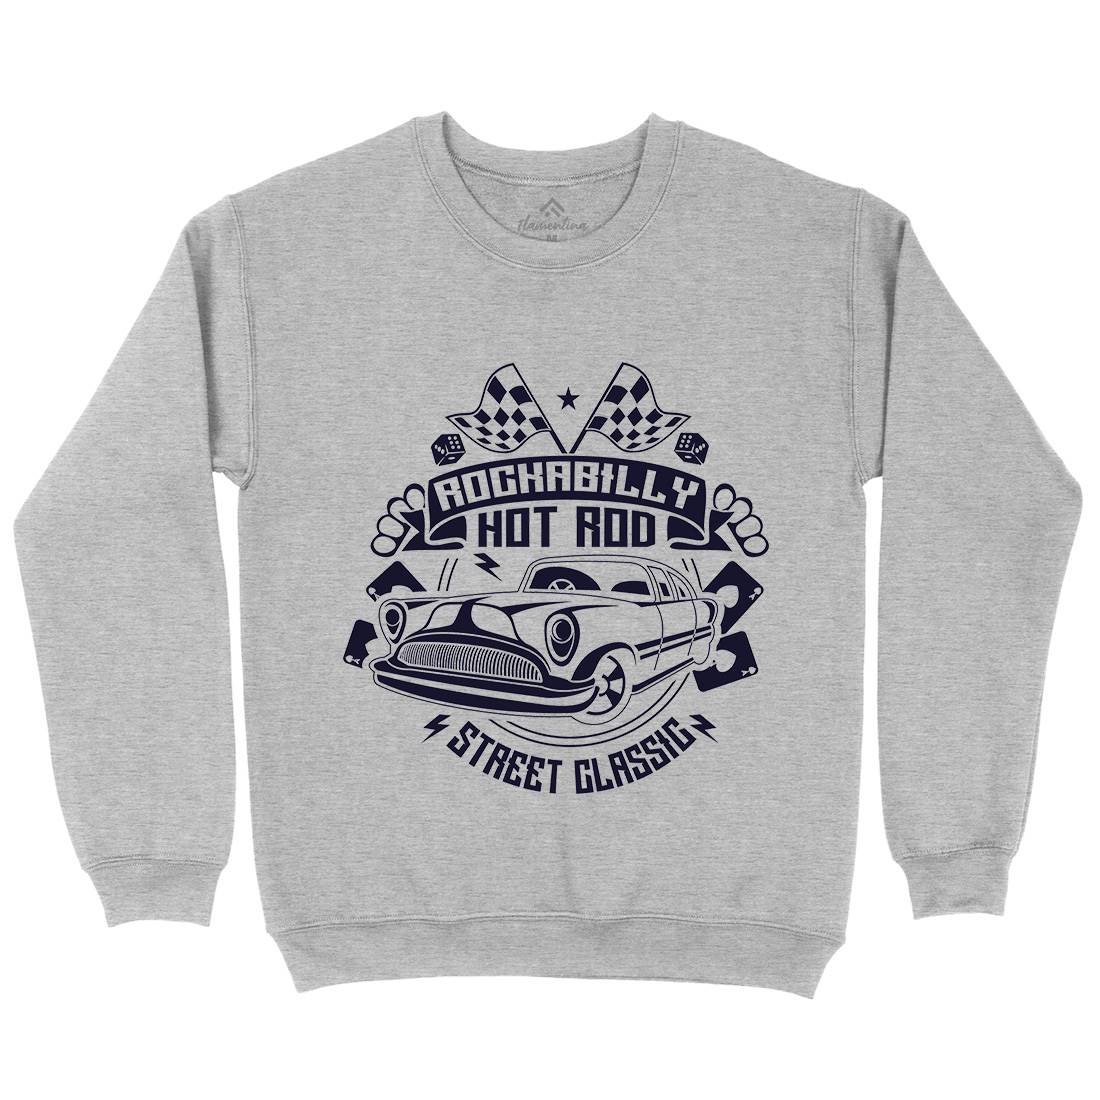 Rockabilly Hotrod Kids Crew Neck Sweatshirt Cars A128